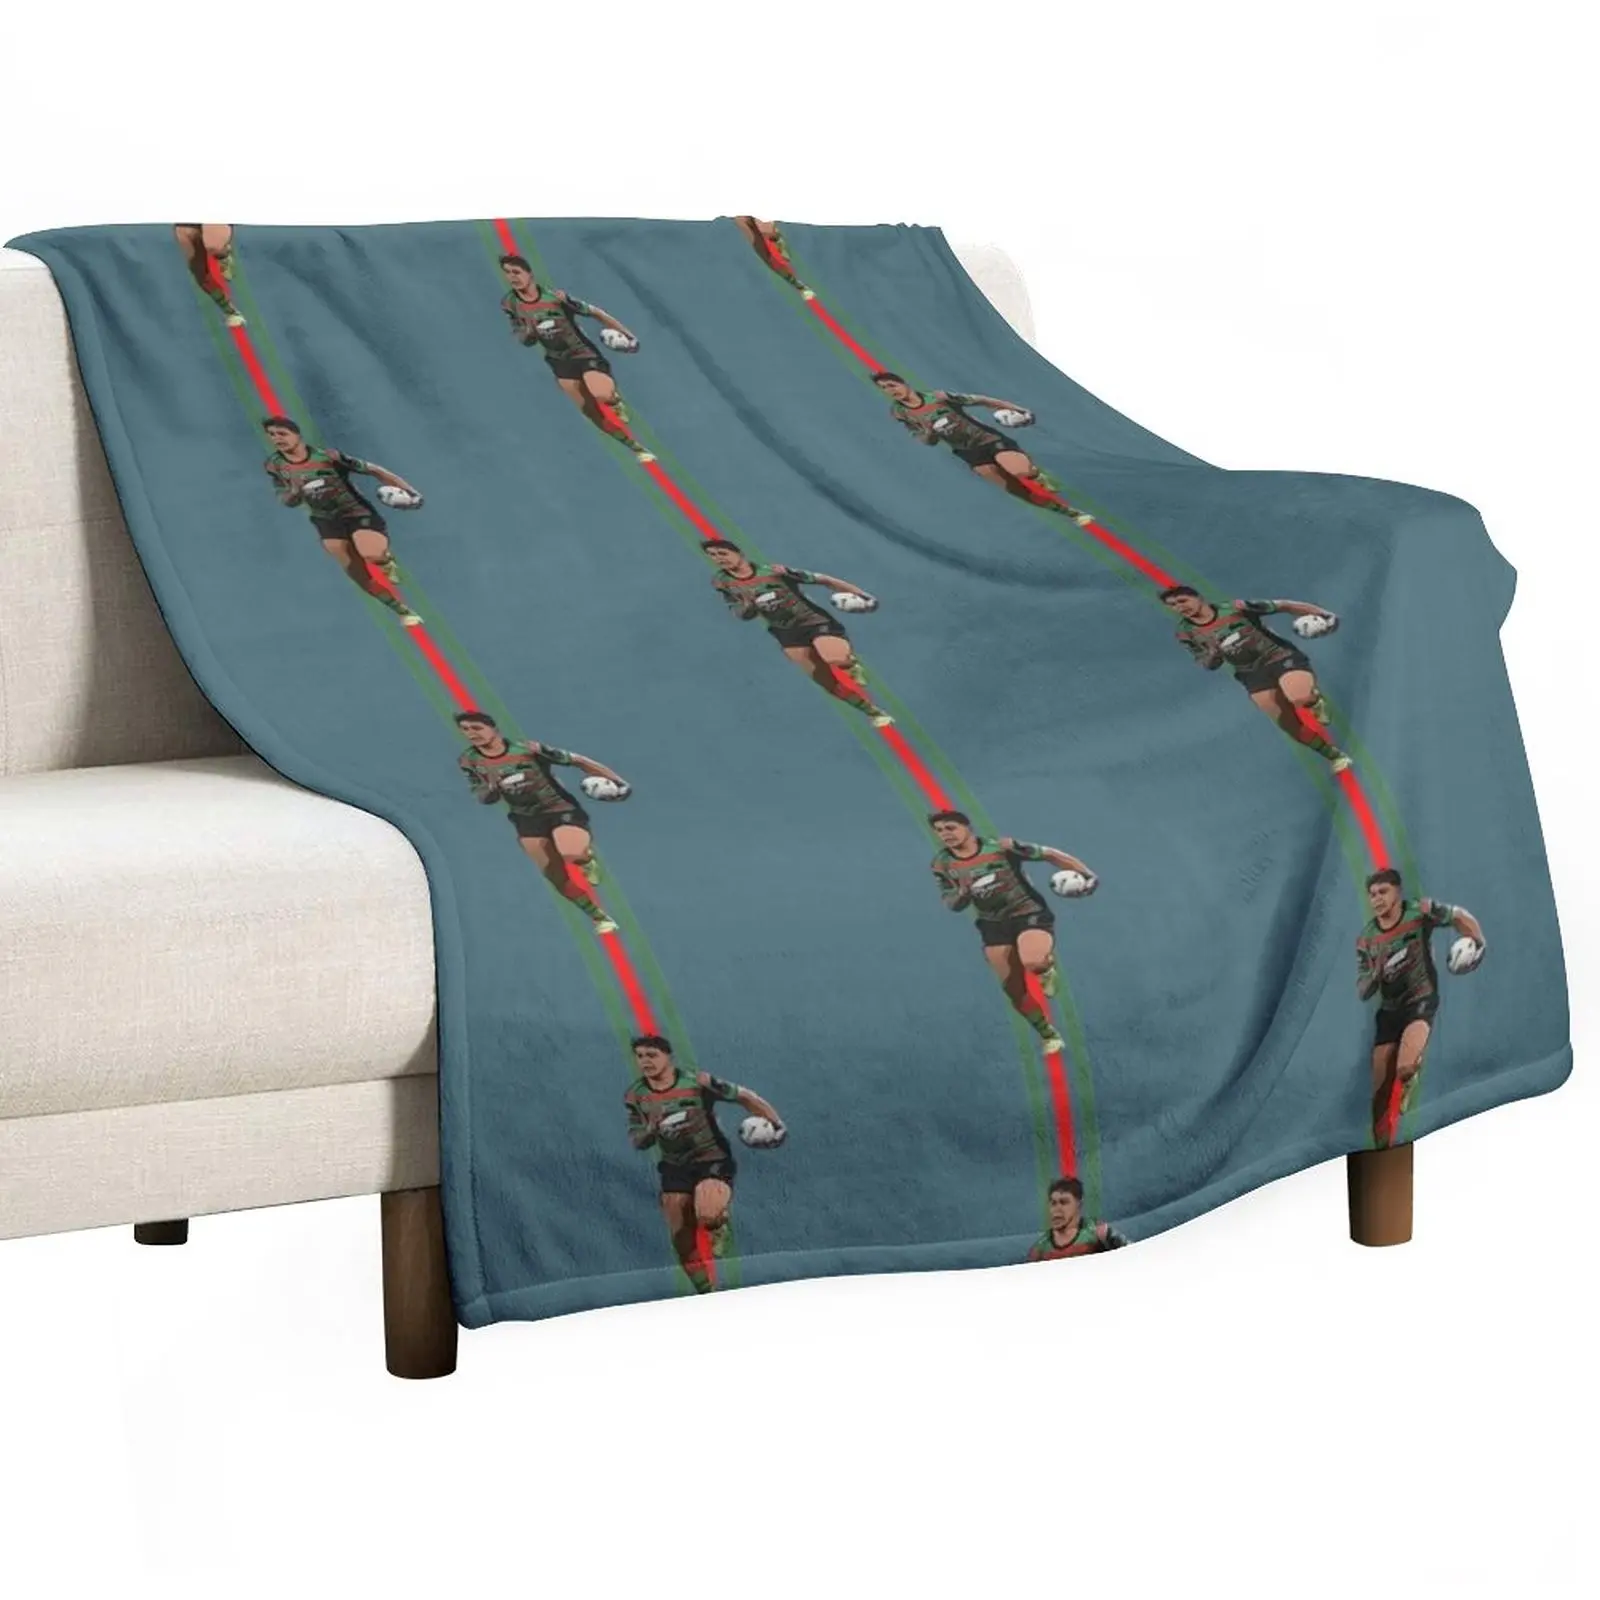 

latrell mitchell south sydney rabbitohs Classic Throw Blanket Cute Plaid warm winter Blankets